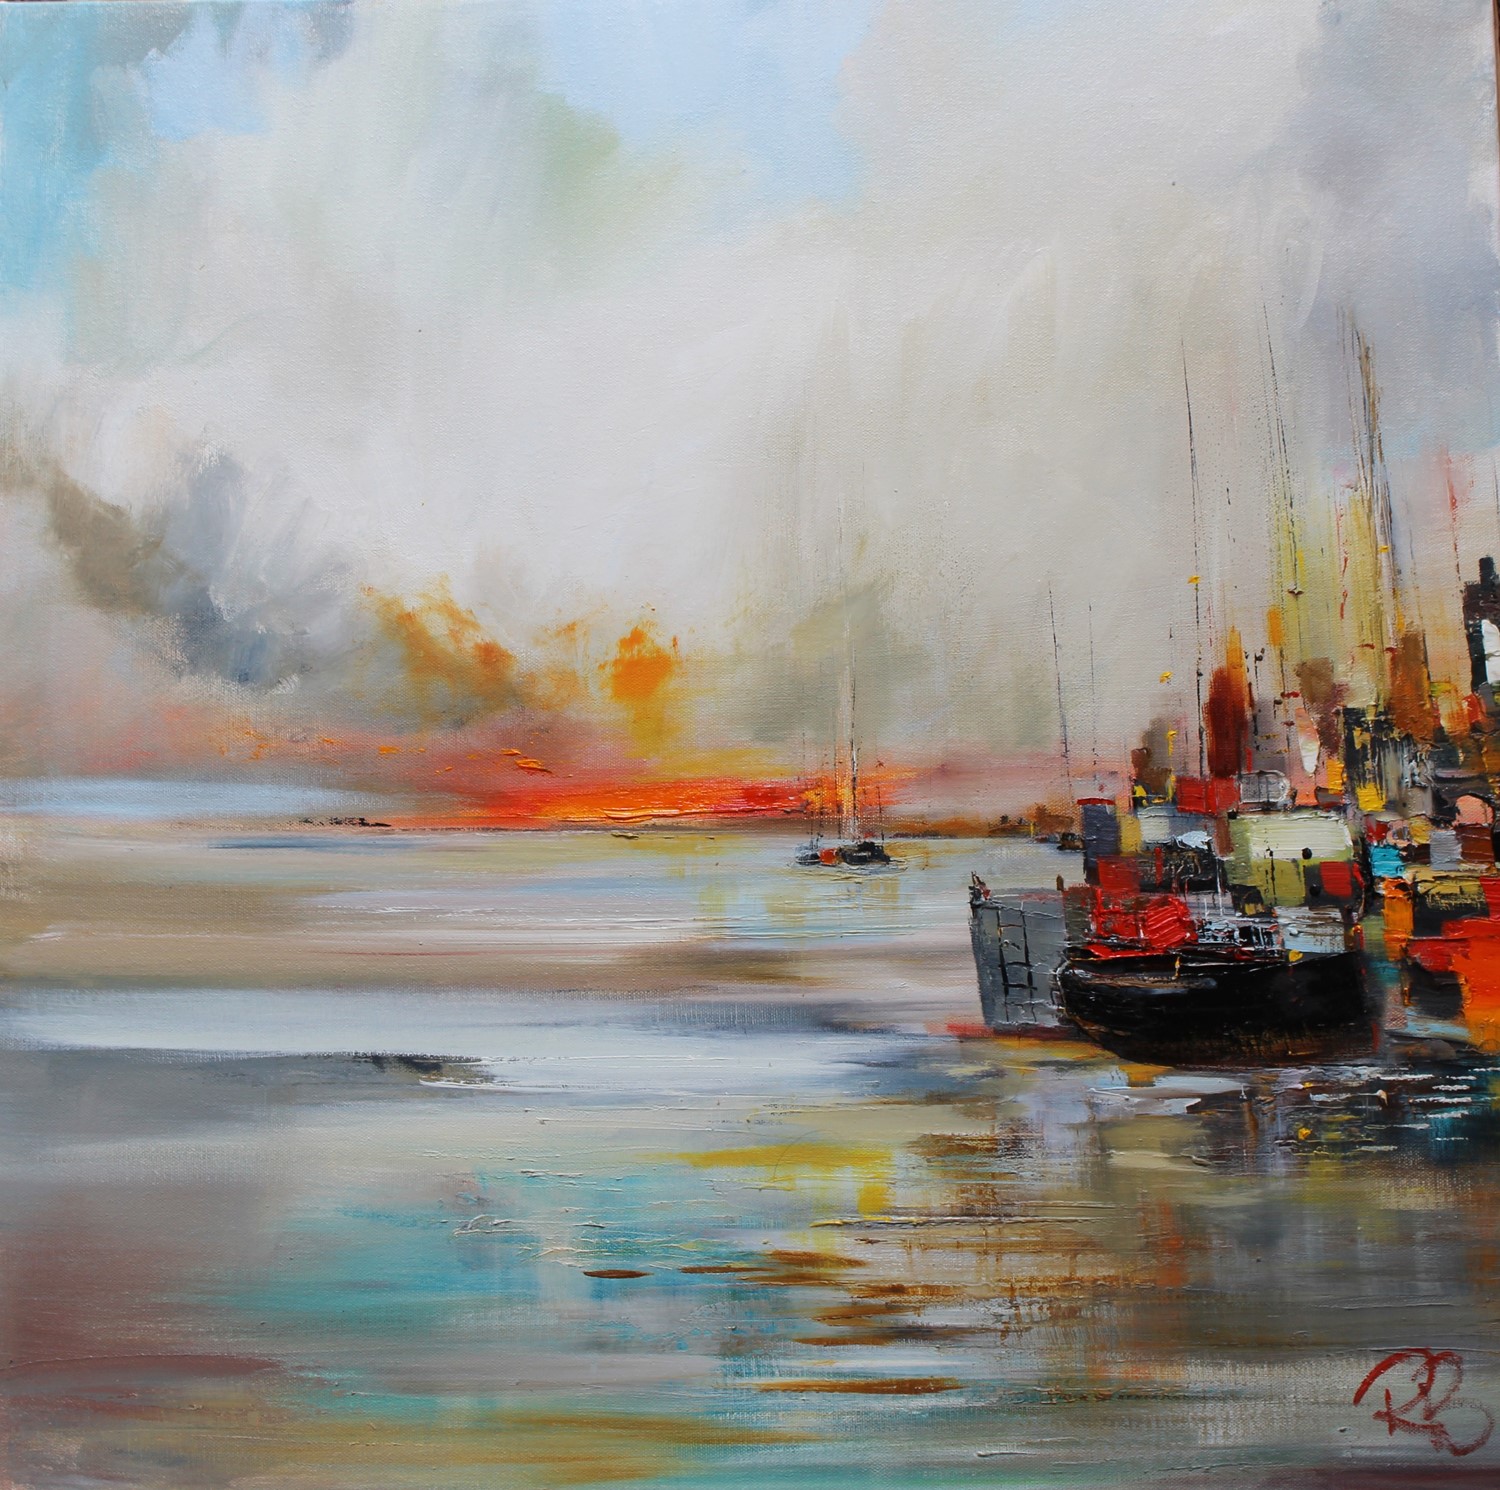 'Fishing Harbour' by artist Rosanne Barr